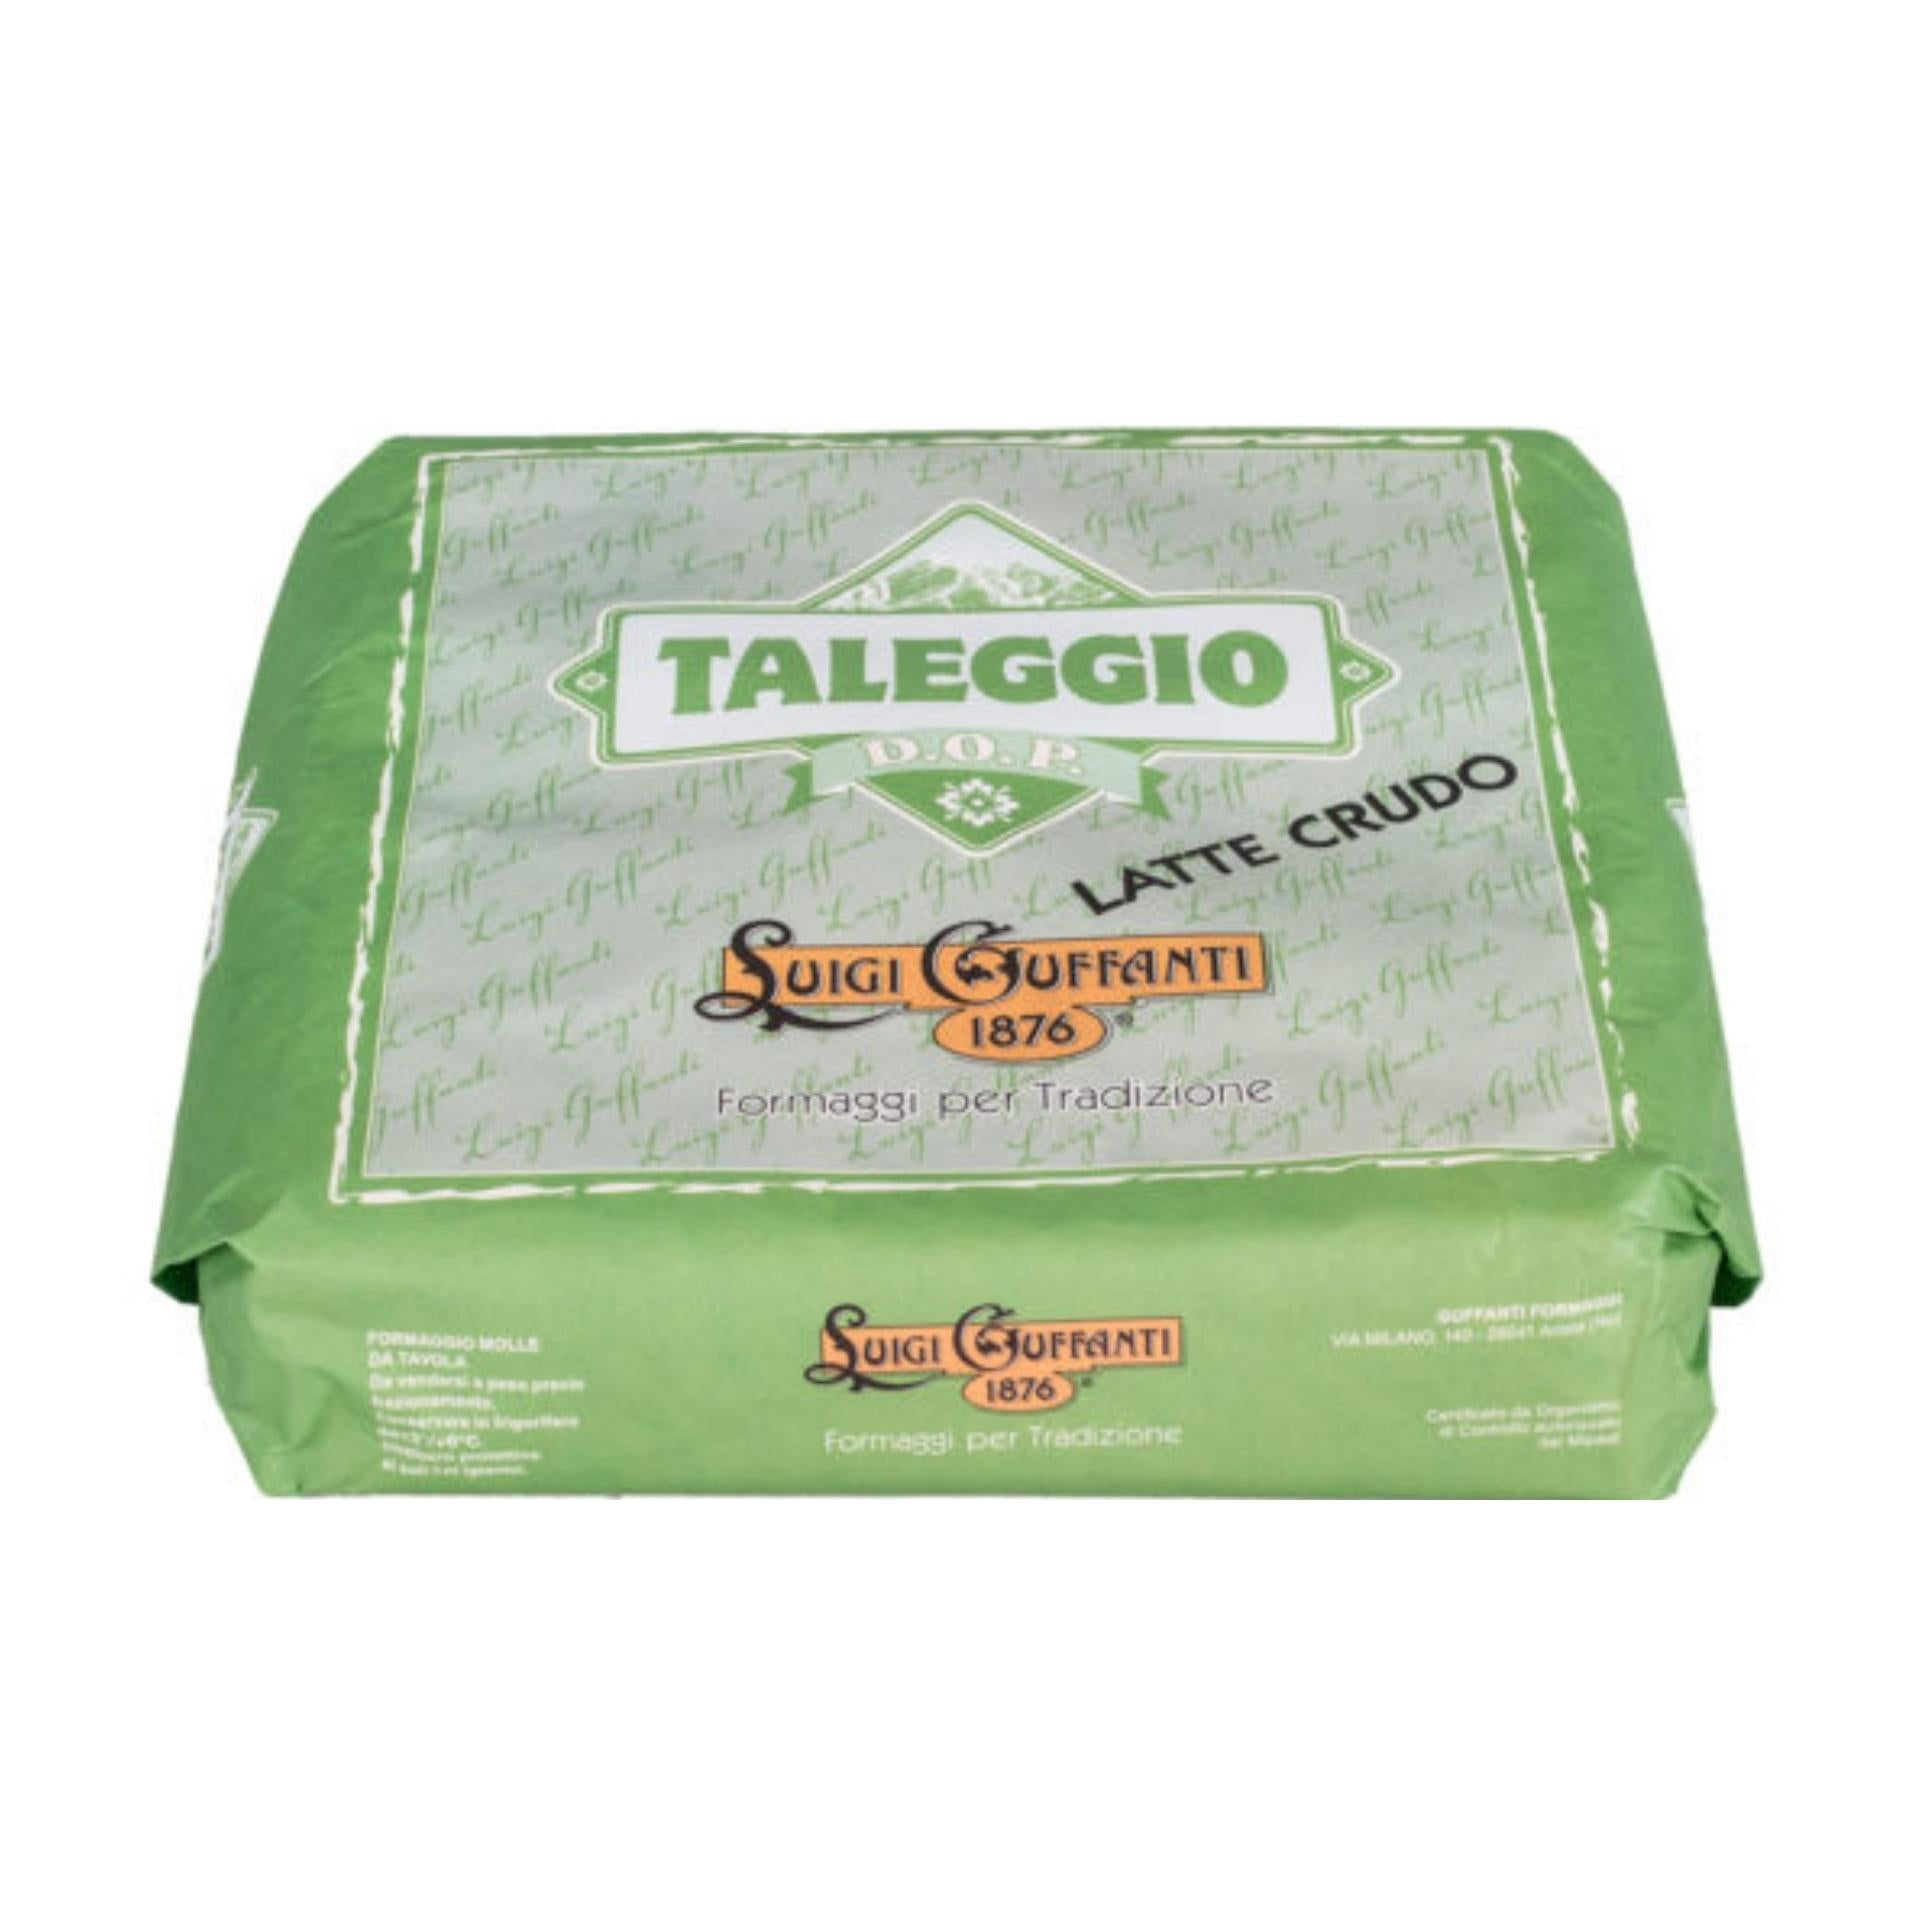 Taleggio DOP cheese in brand packaging